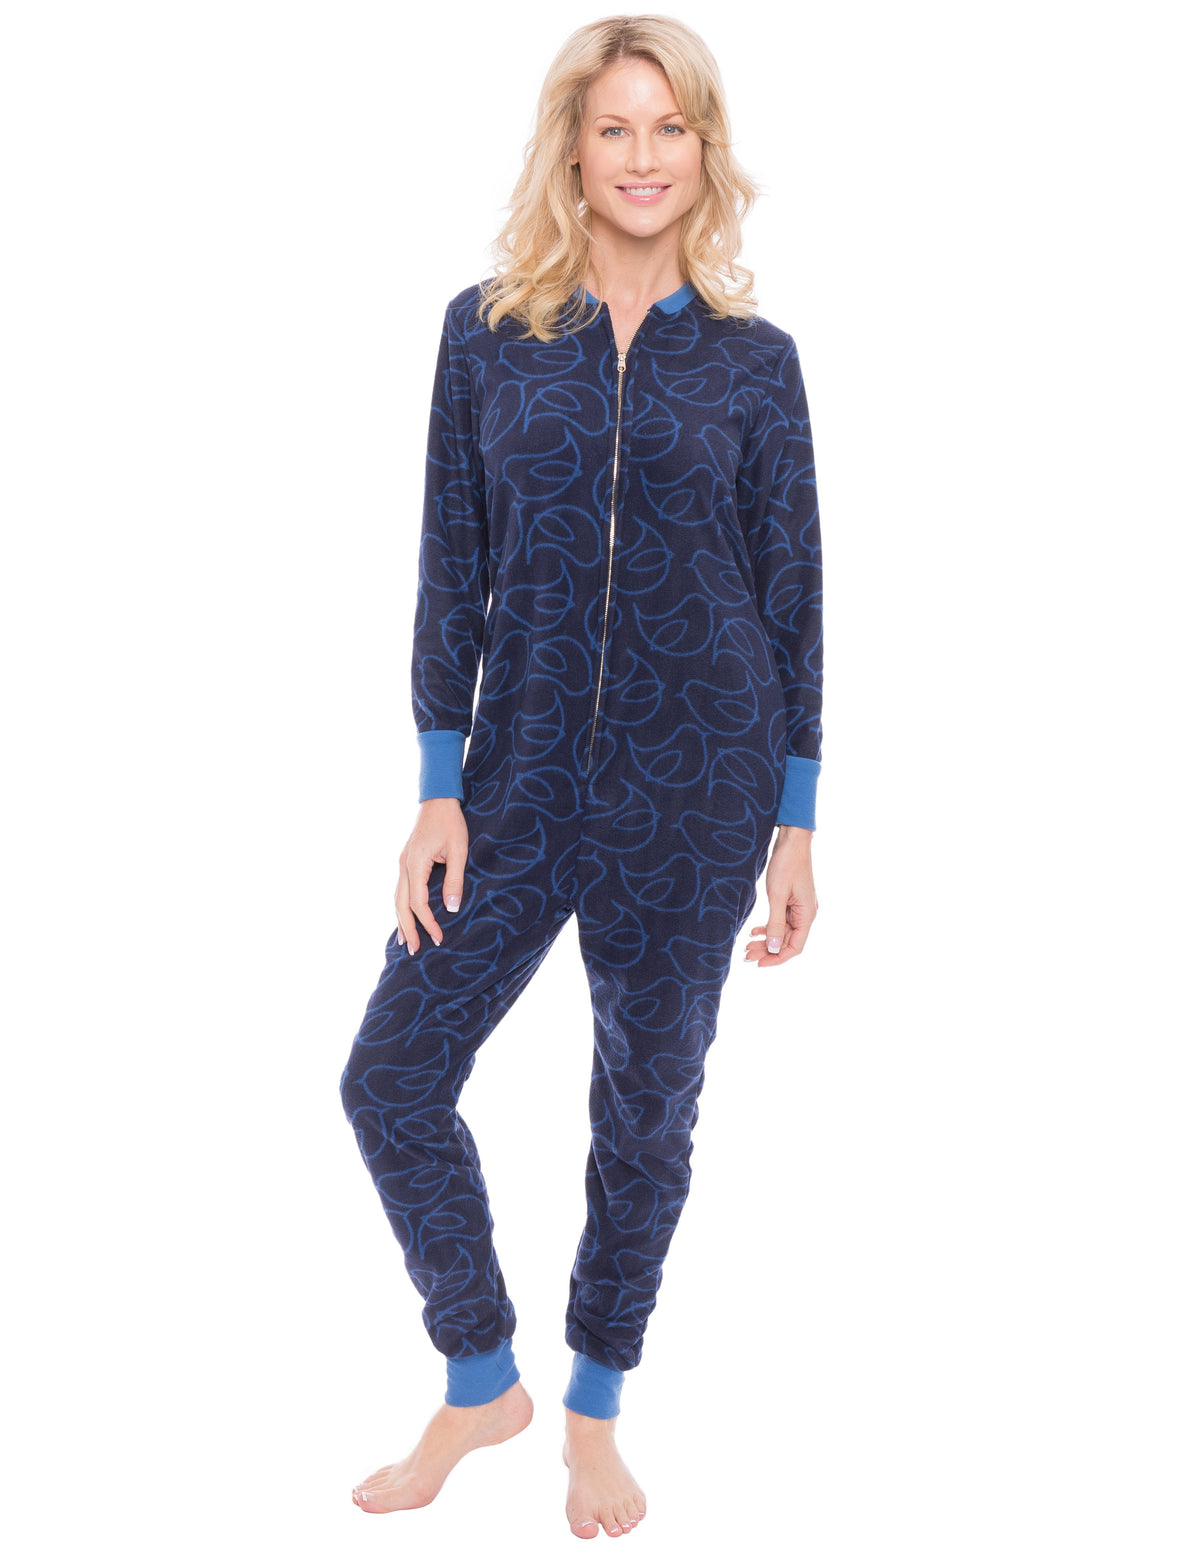 Women's Premium Microfleece Onesie Jumper Pajama - Bird Maze Navy